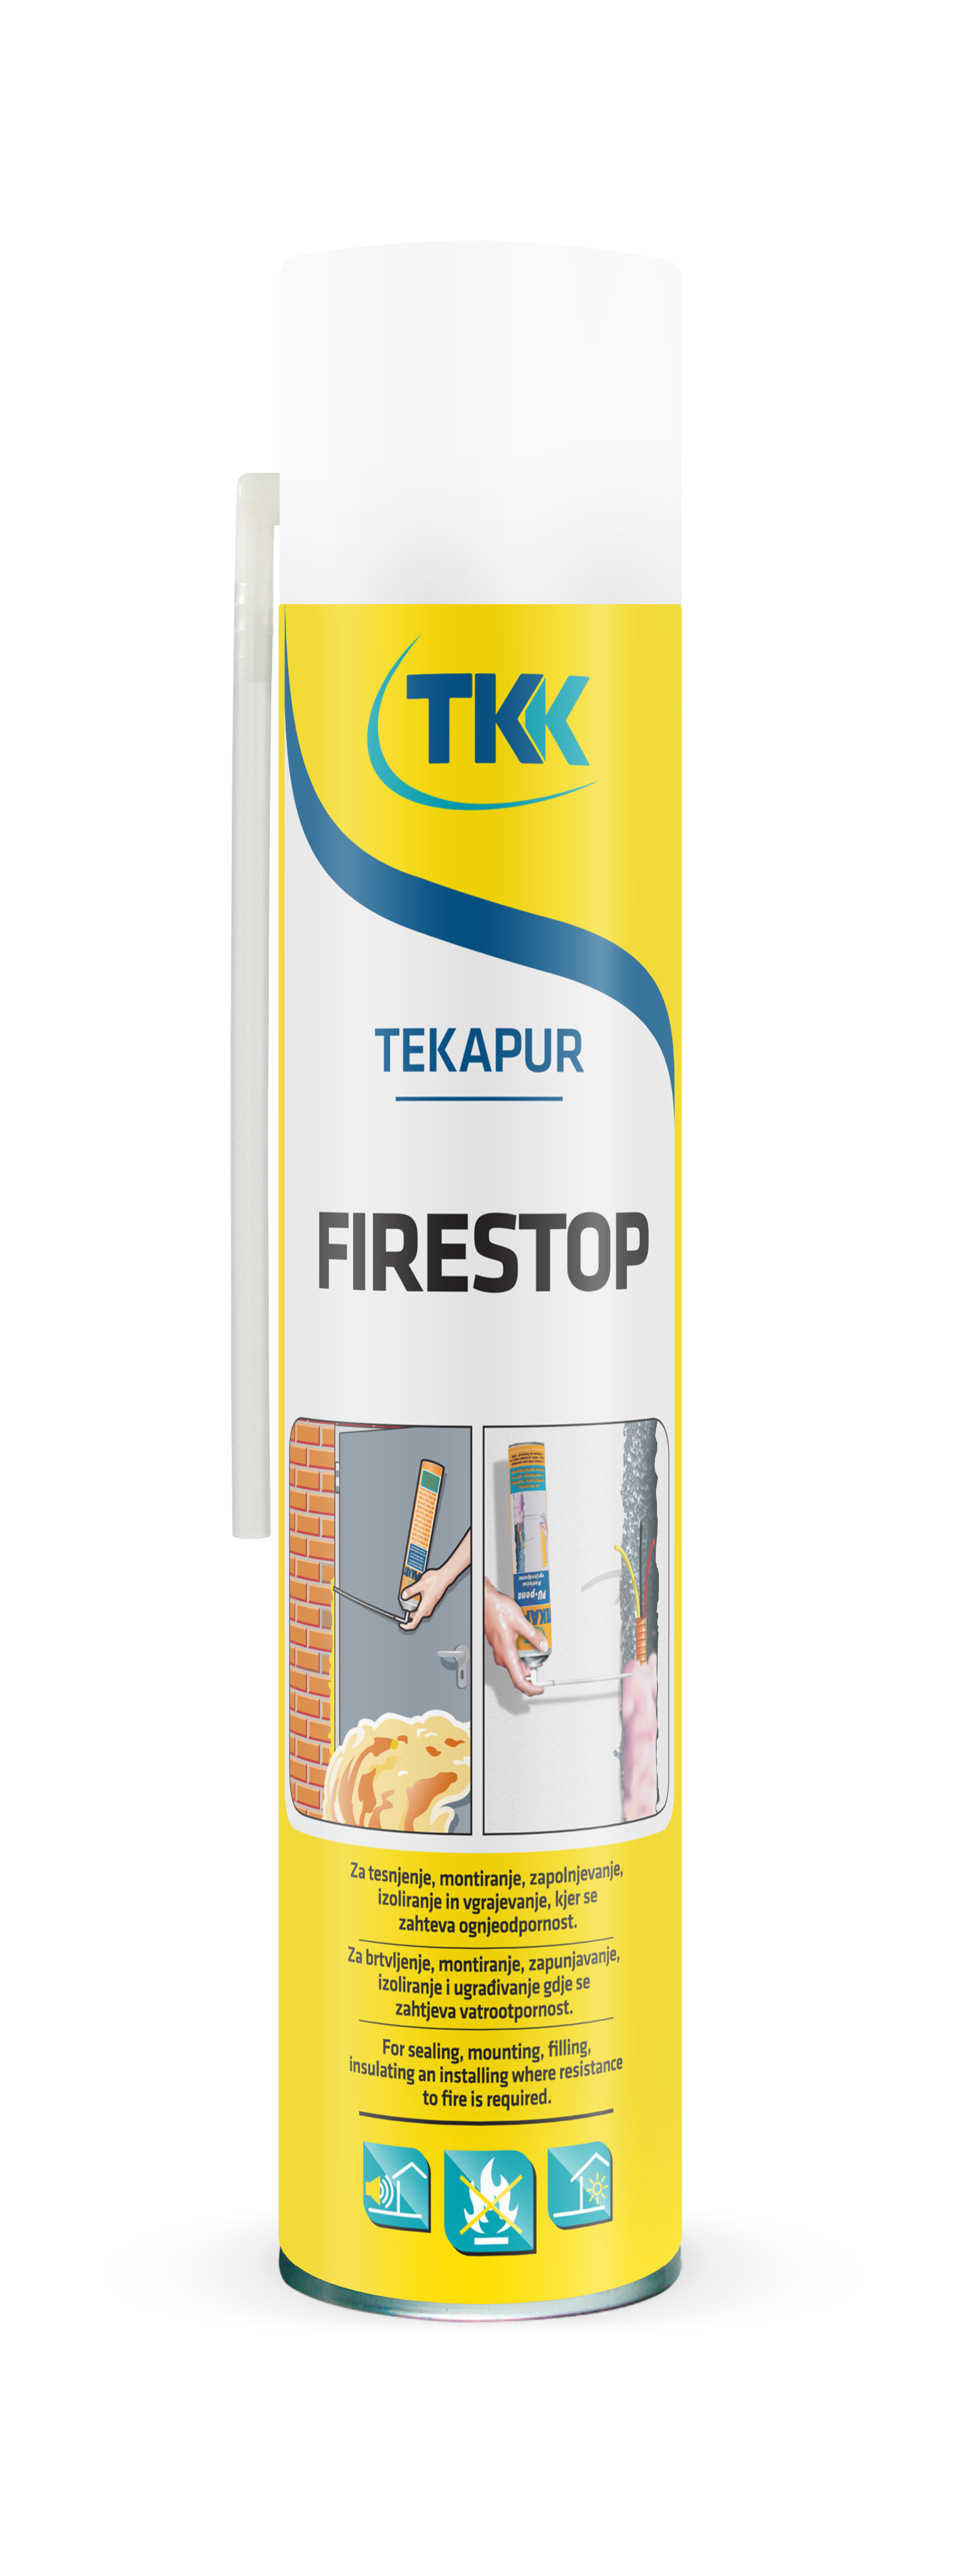 TEKAPUR Spray огнестойкая бытовая монтажная пена 700 мл.